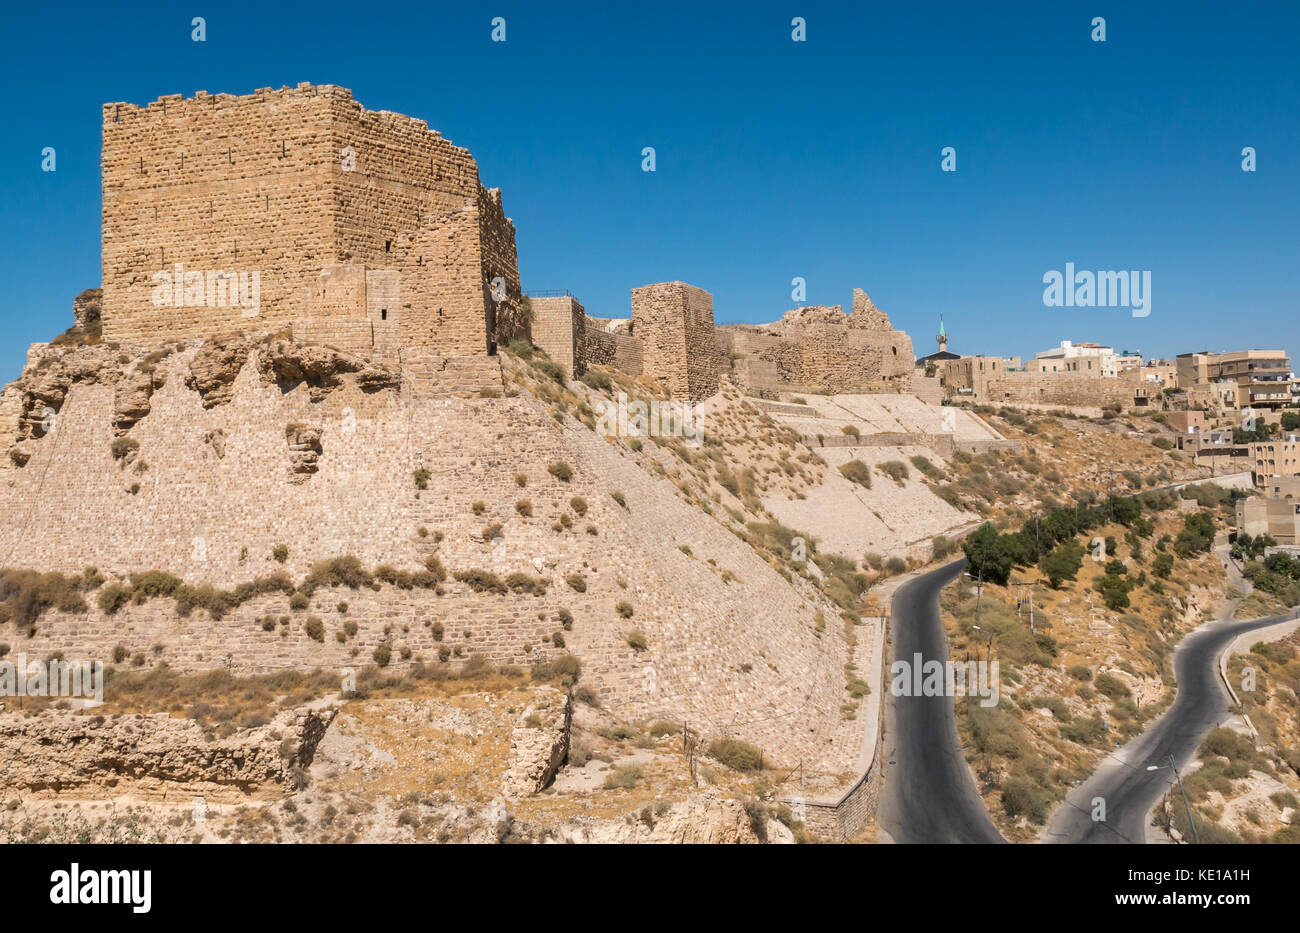 of Castle, 12th century castle, Kings Highway, Jordan, Middle East Stock Photo - Alamy